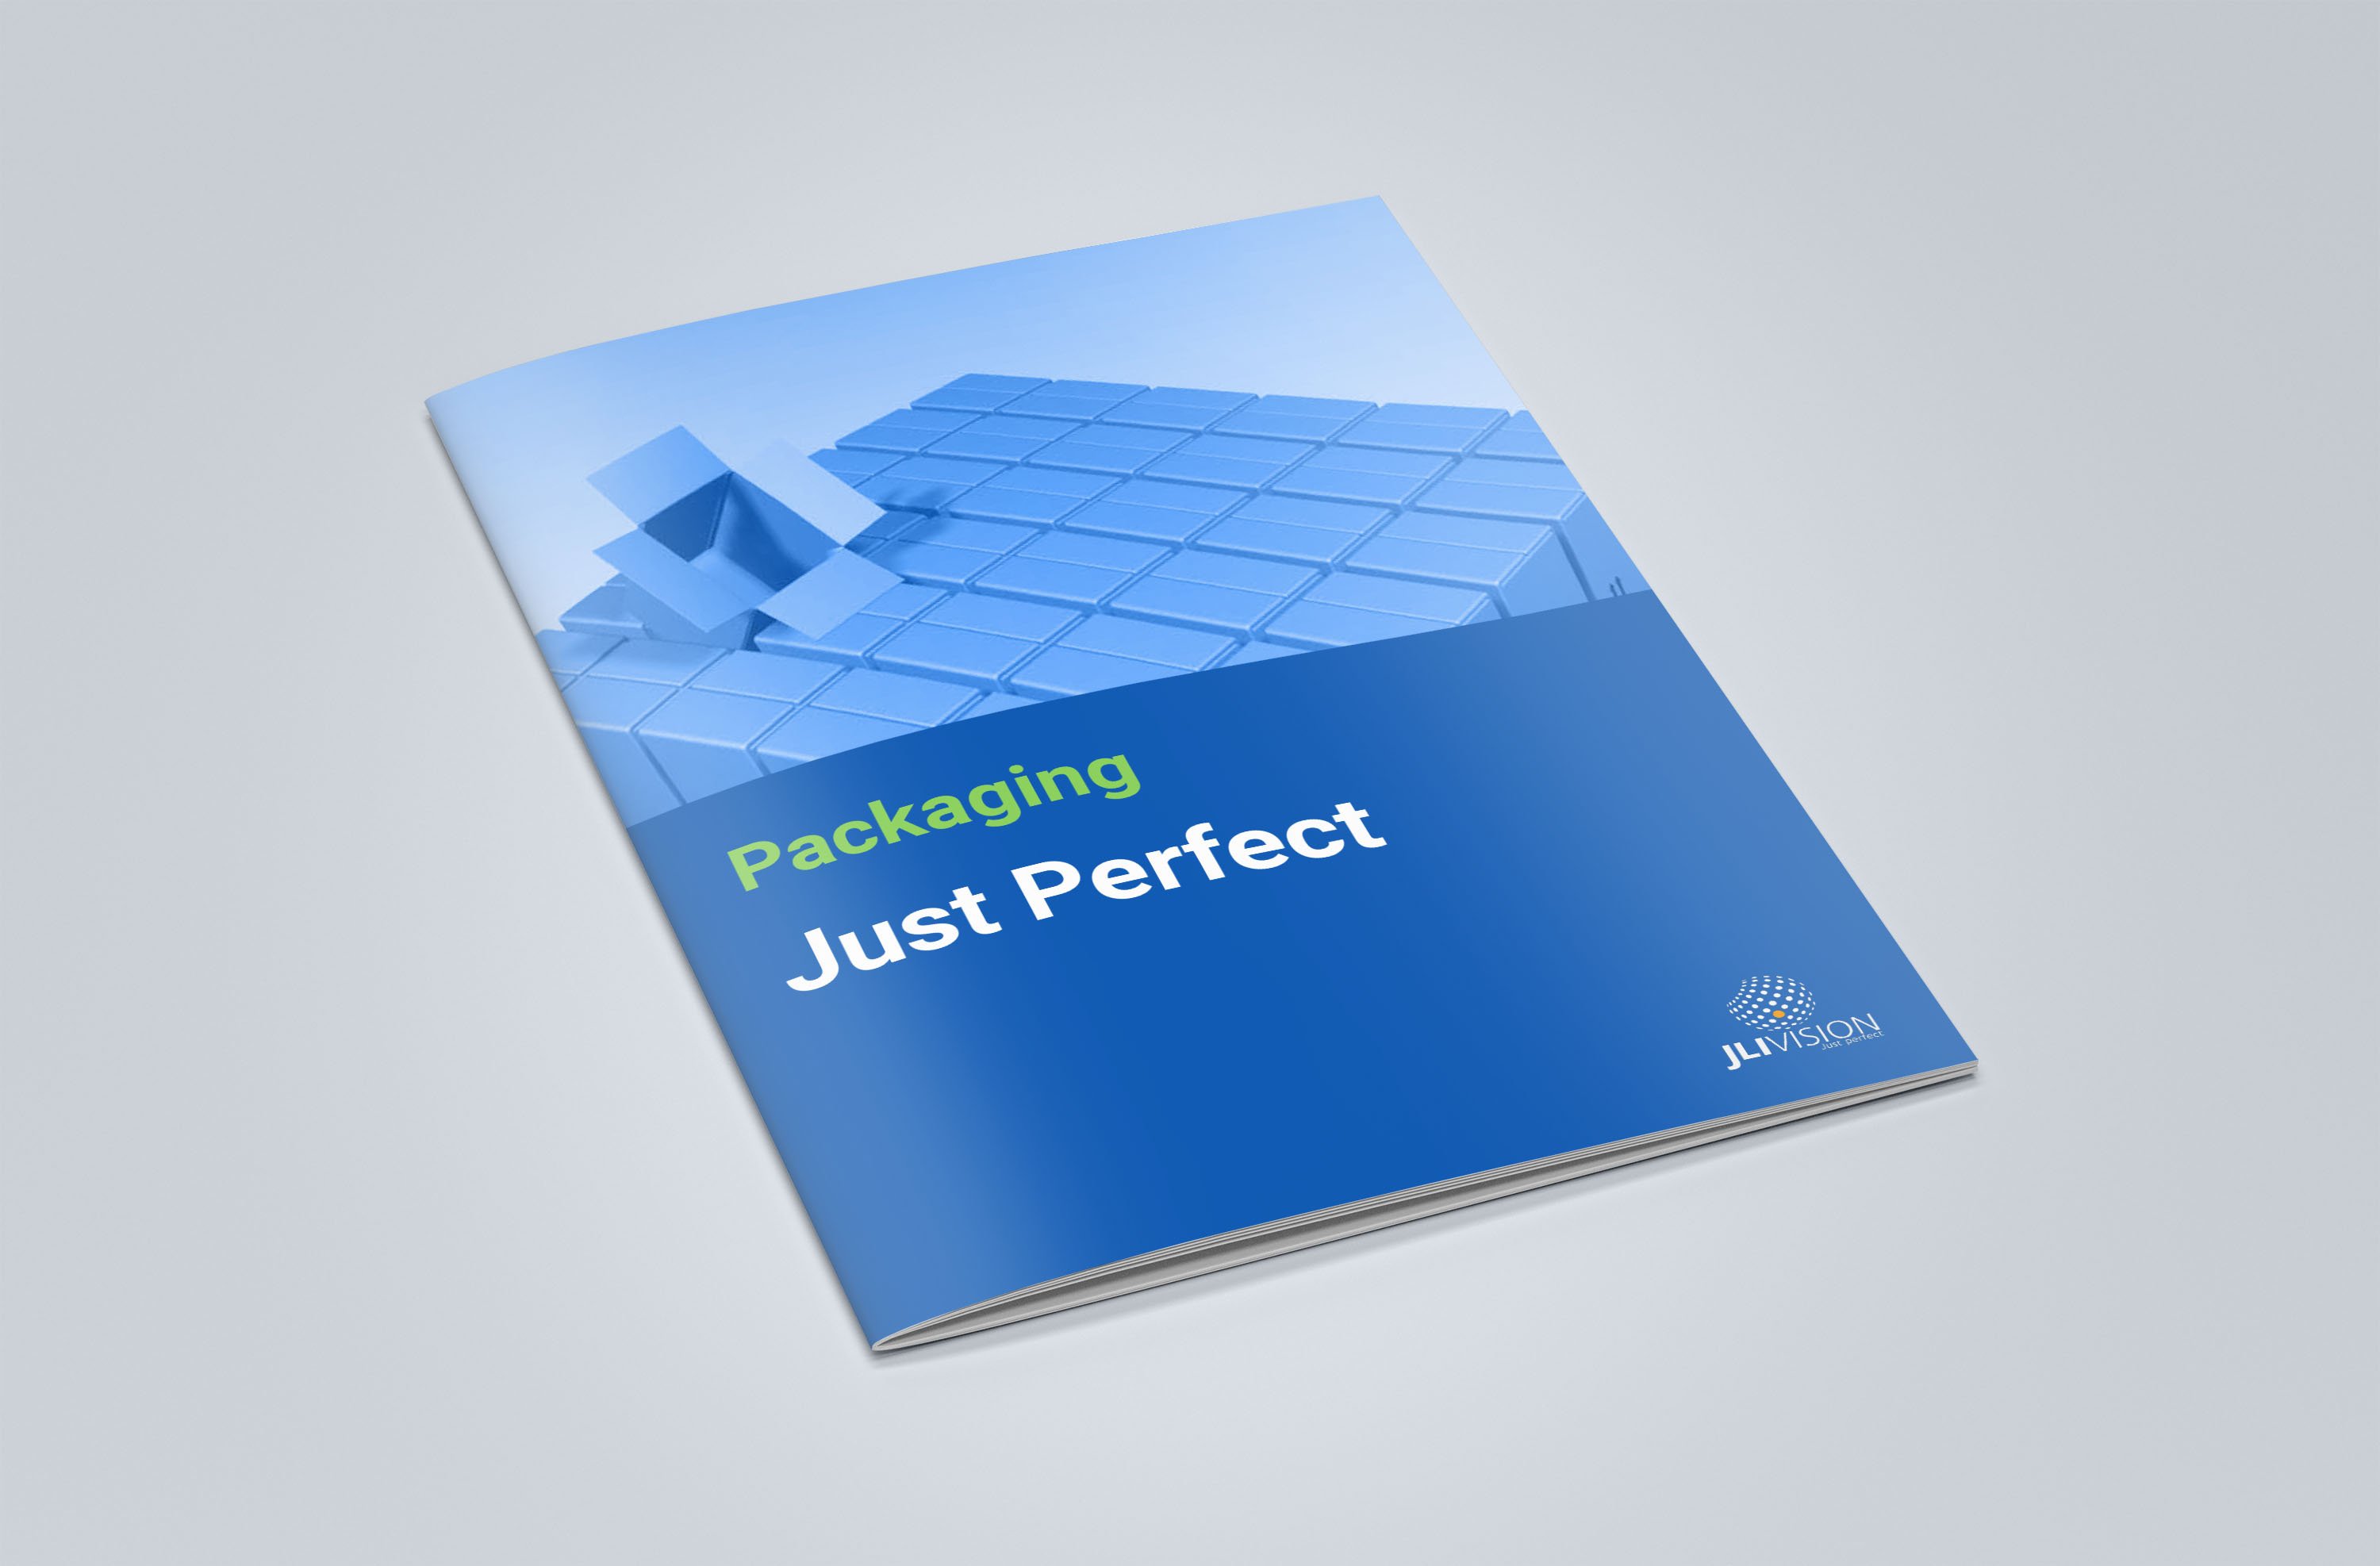 Packaging inspection brochure